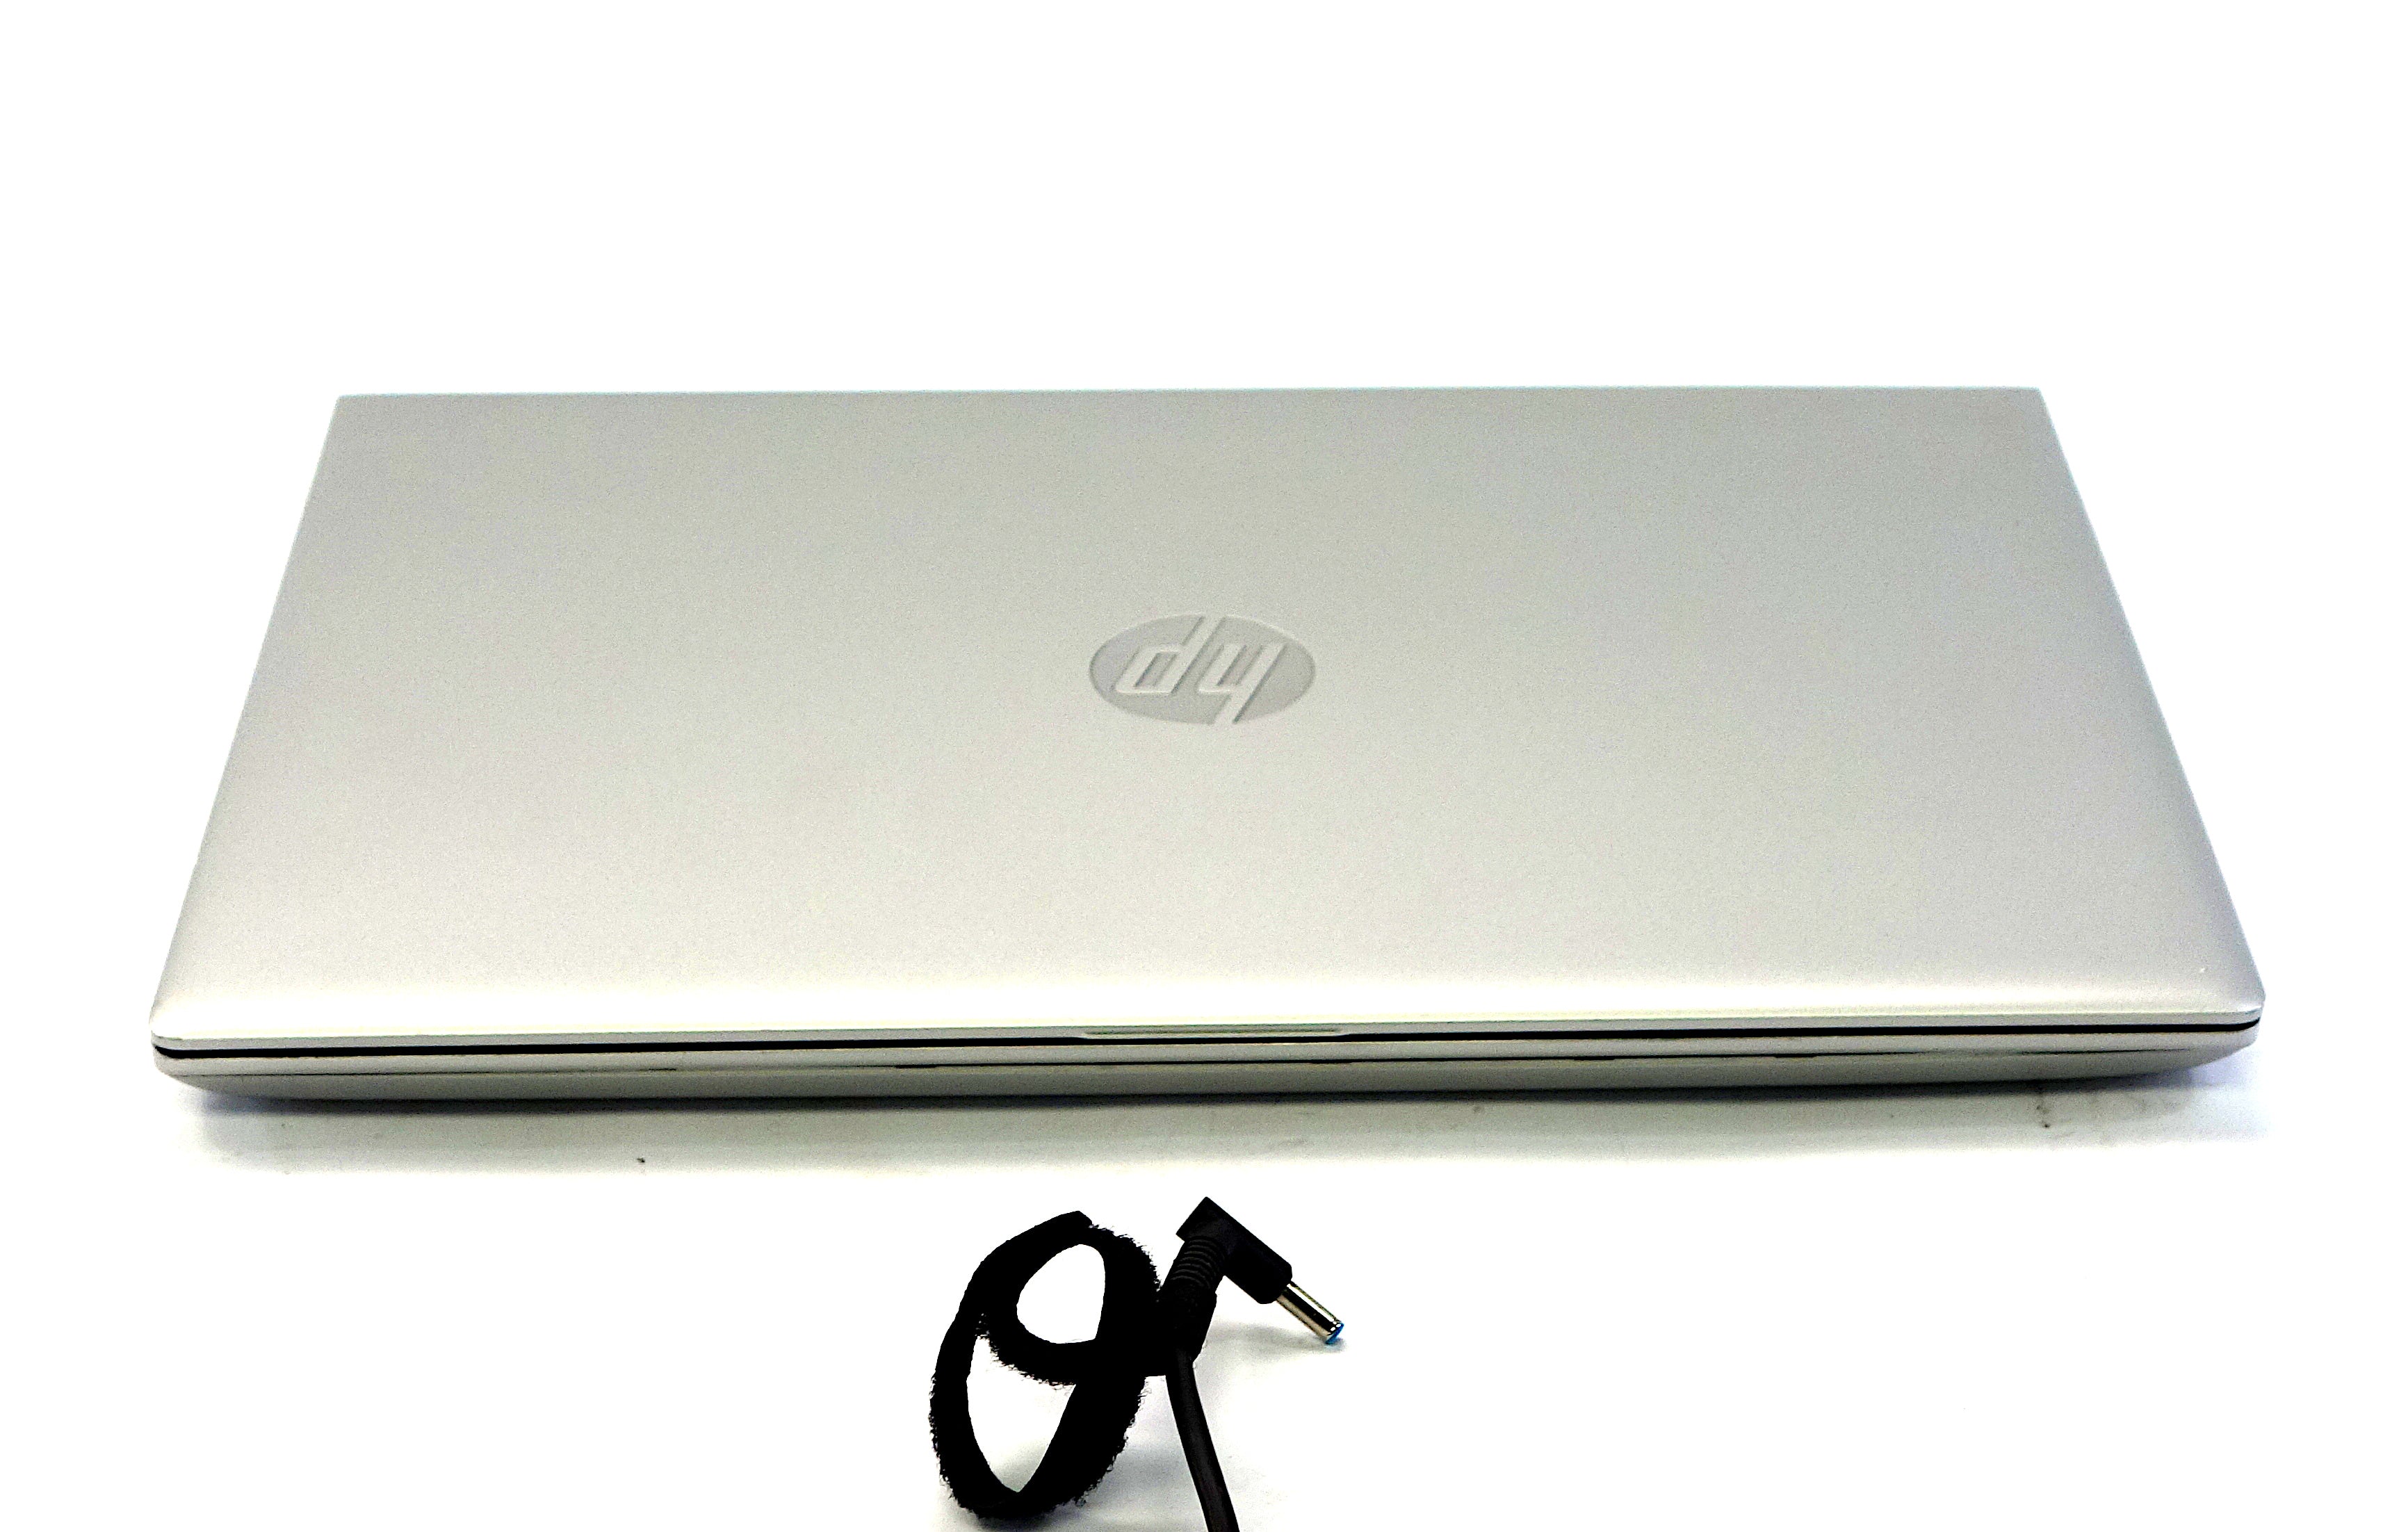 HP ProBook 650 G4 Laptop, 15.6" Core i5 8th Gen, 8GB RAM, 256GB SSD